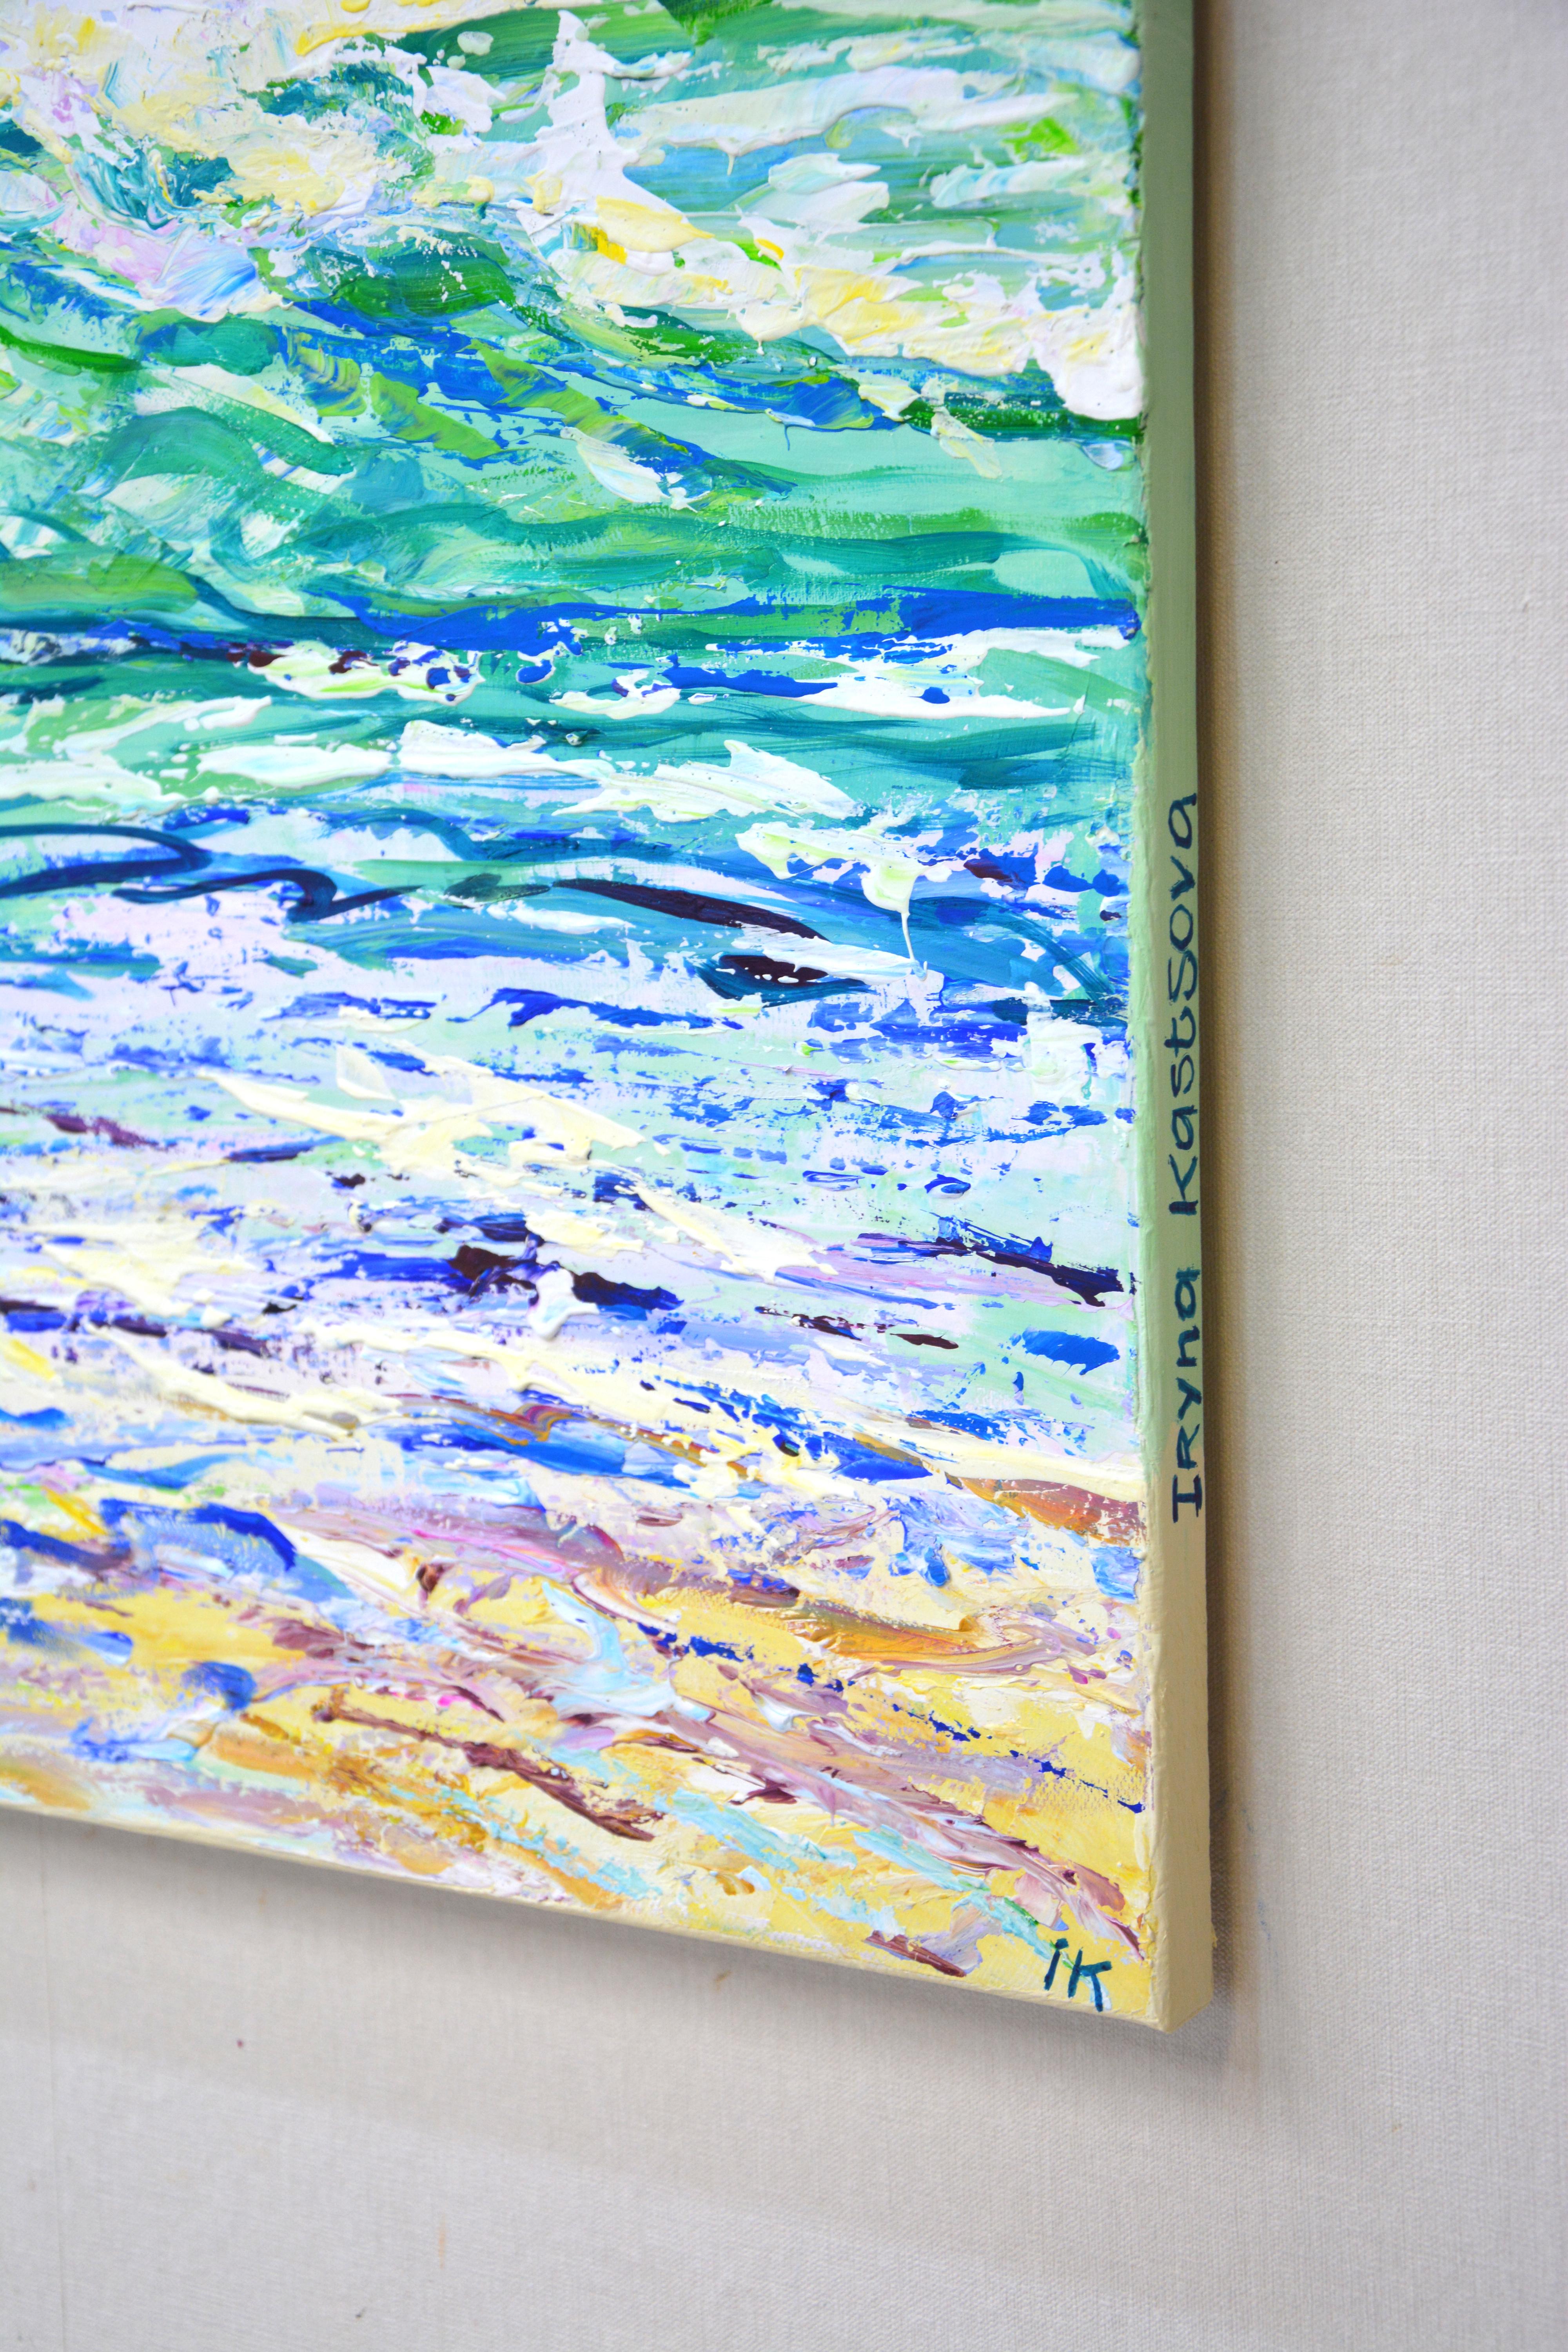 			Ocean waves 3. - Impressionist Painting by Iryna Kastsova